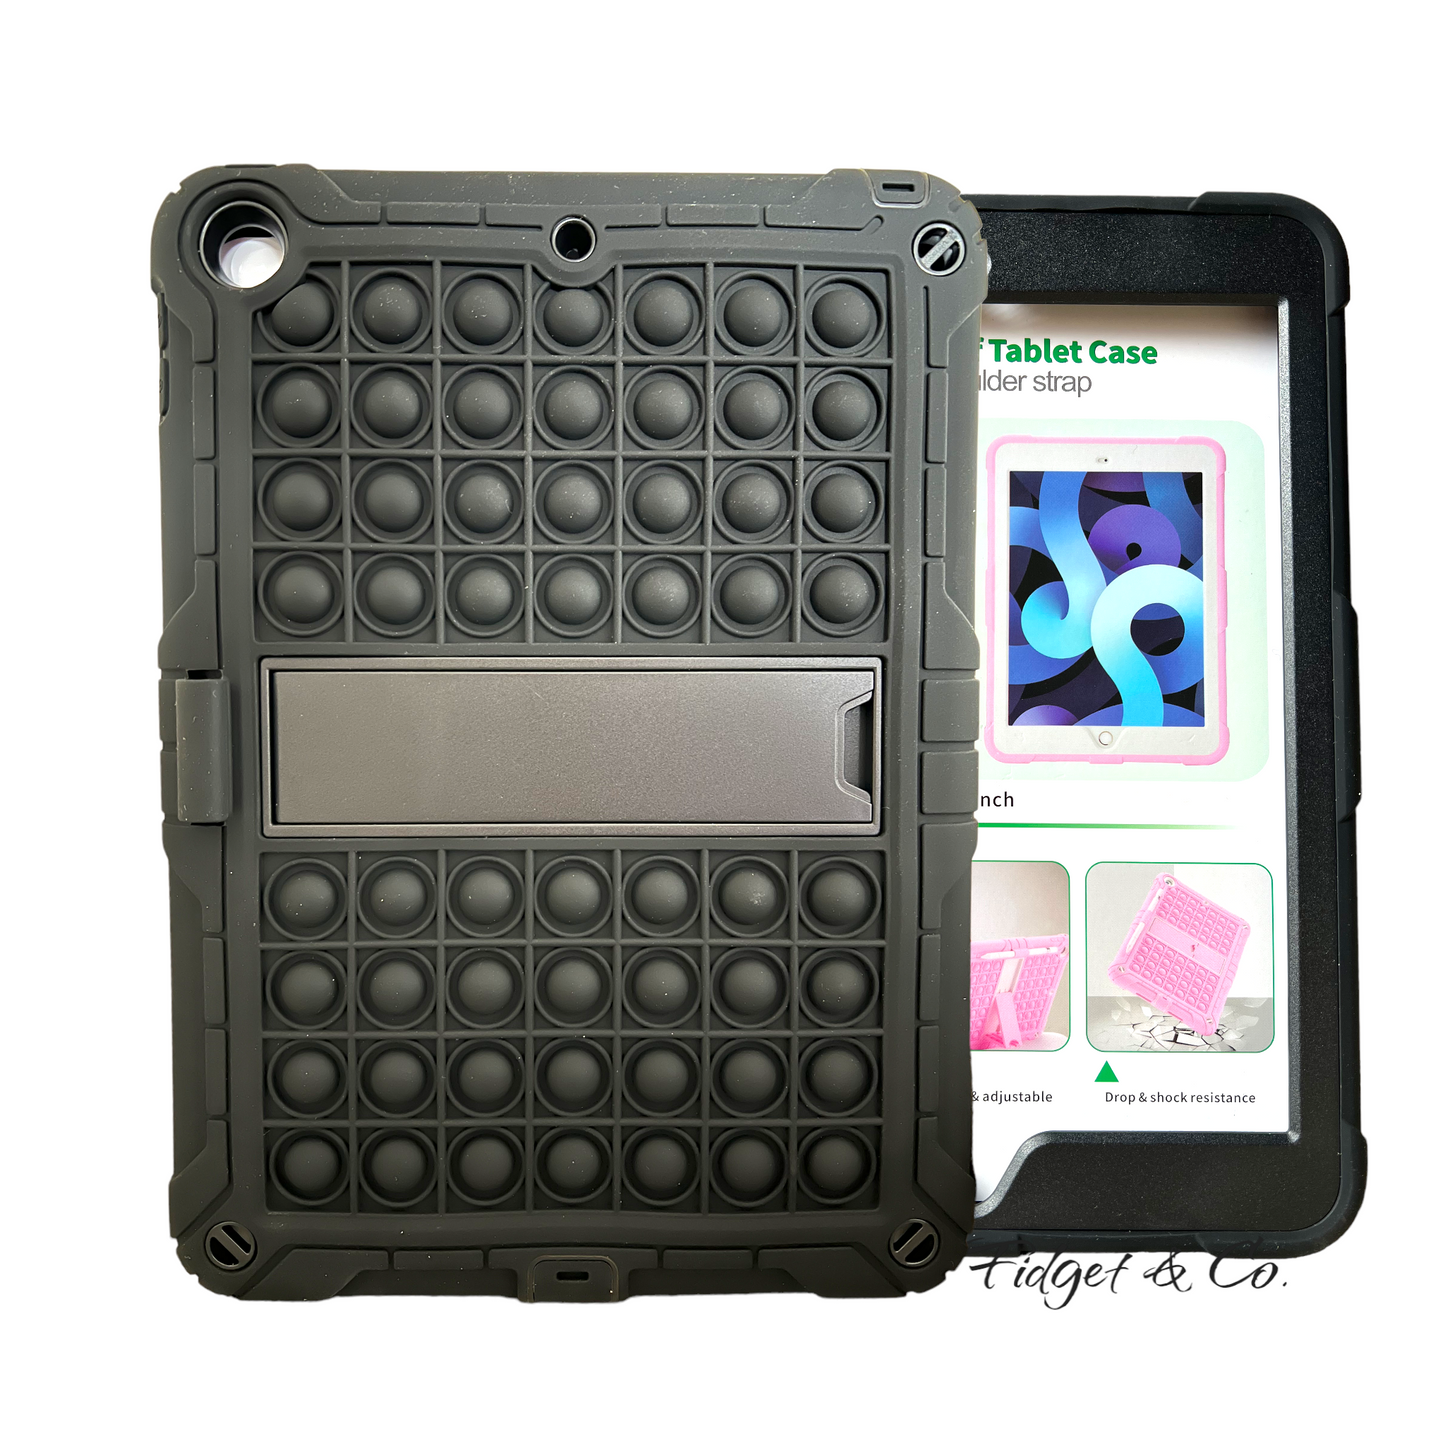 Shock & Drop Resistant Pop It Apple Fidget Sensory iPad Case with adjustable Shoulder Strap